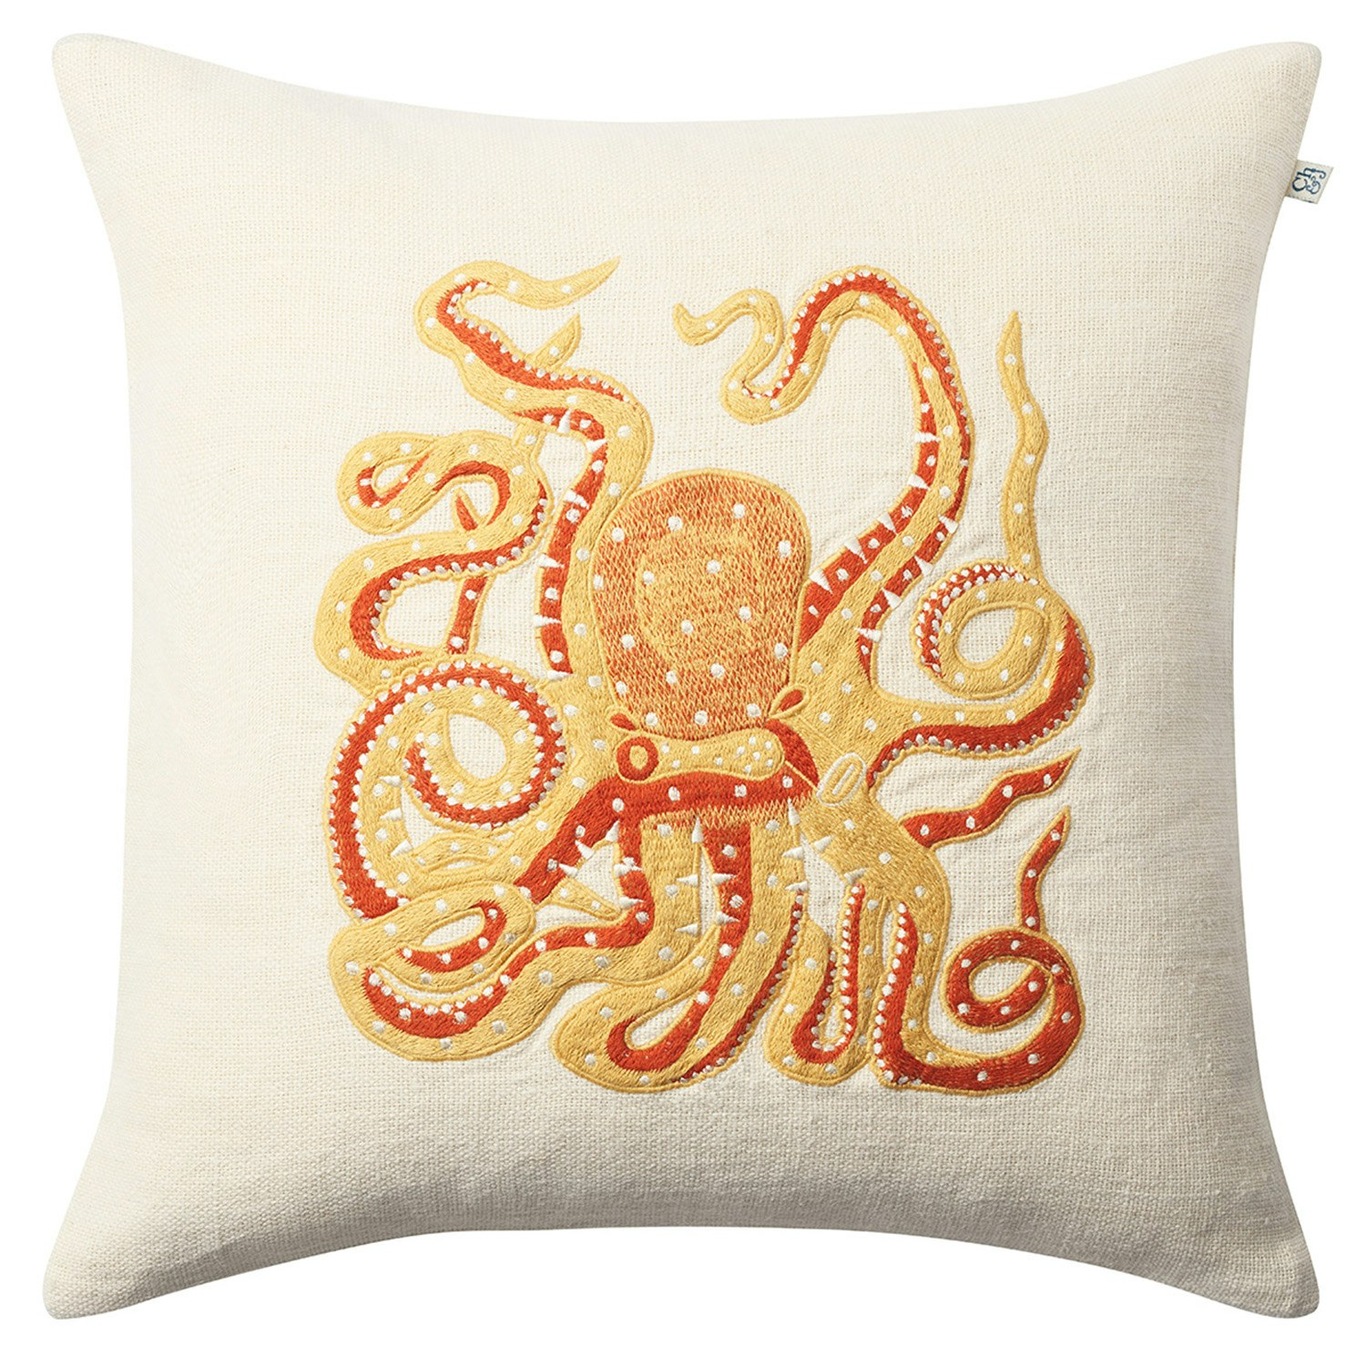 Octopus Cushion Cover 50x50 cm, Spicy Yellow/Orange